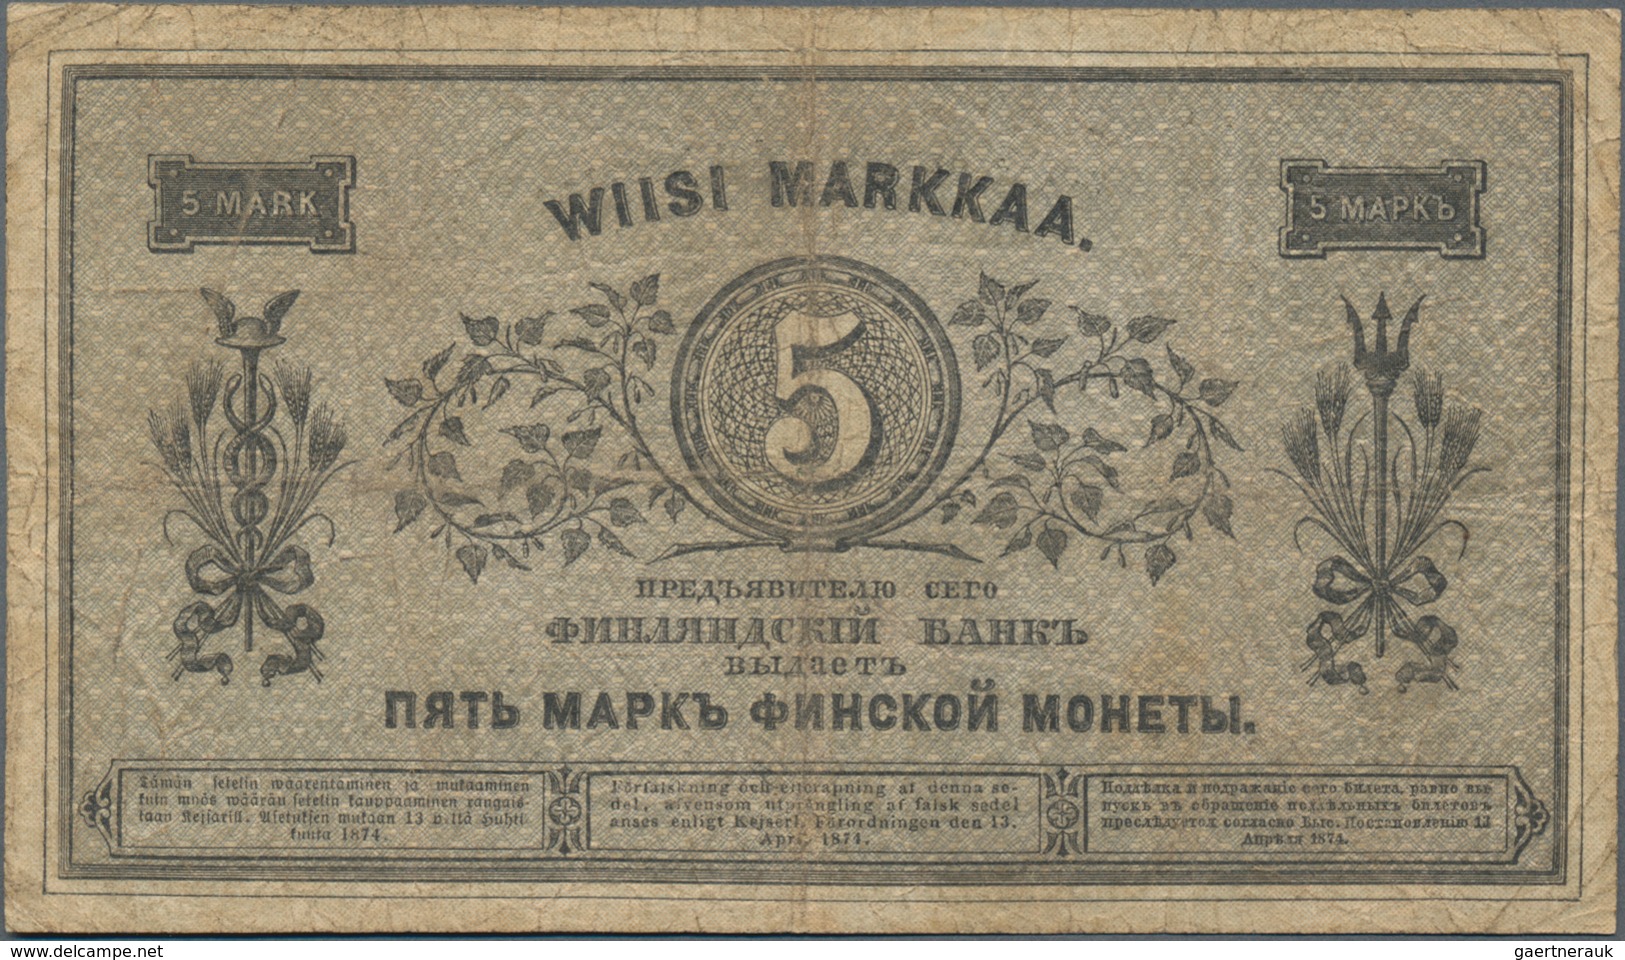 Finland / Finnland: Finlands Bank 5 Markkaa 1878 With Printed Signatures, P.A43b, Still Nice Conditi - Finlande